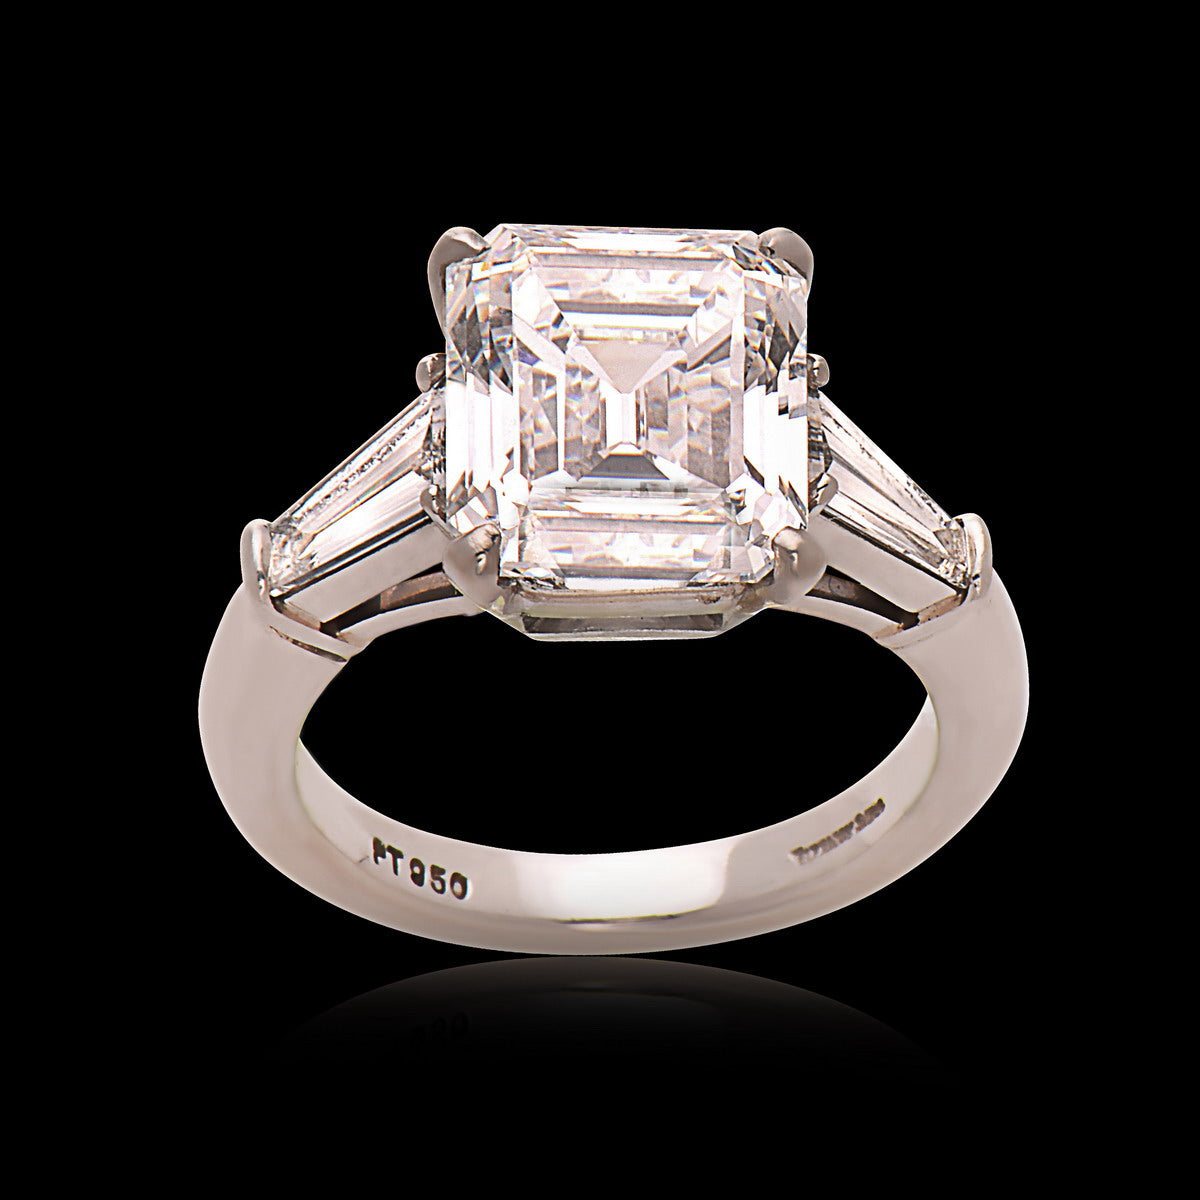  Tiffany  Co  5 92 Carat Emerald Cut Diamond Platinum 